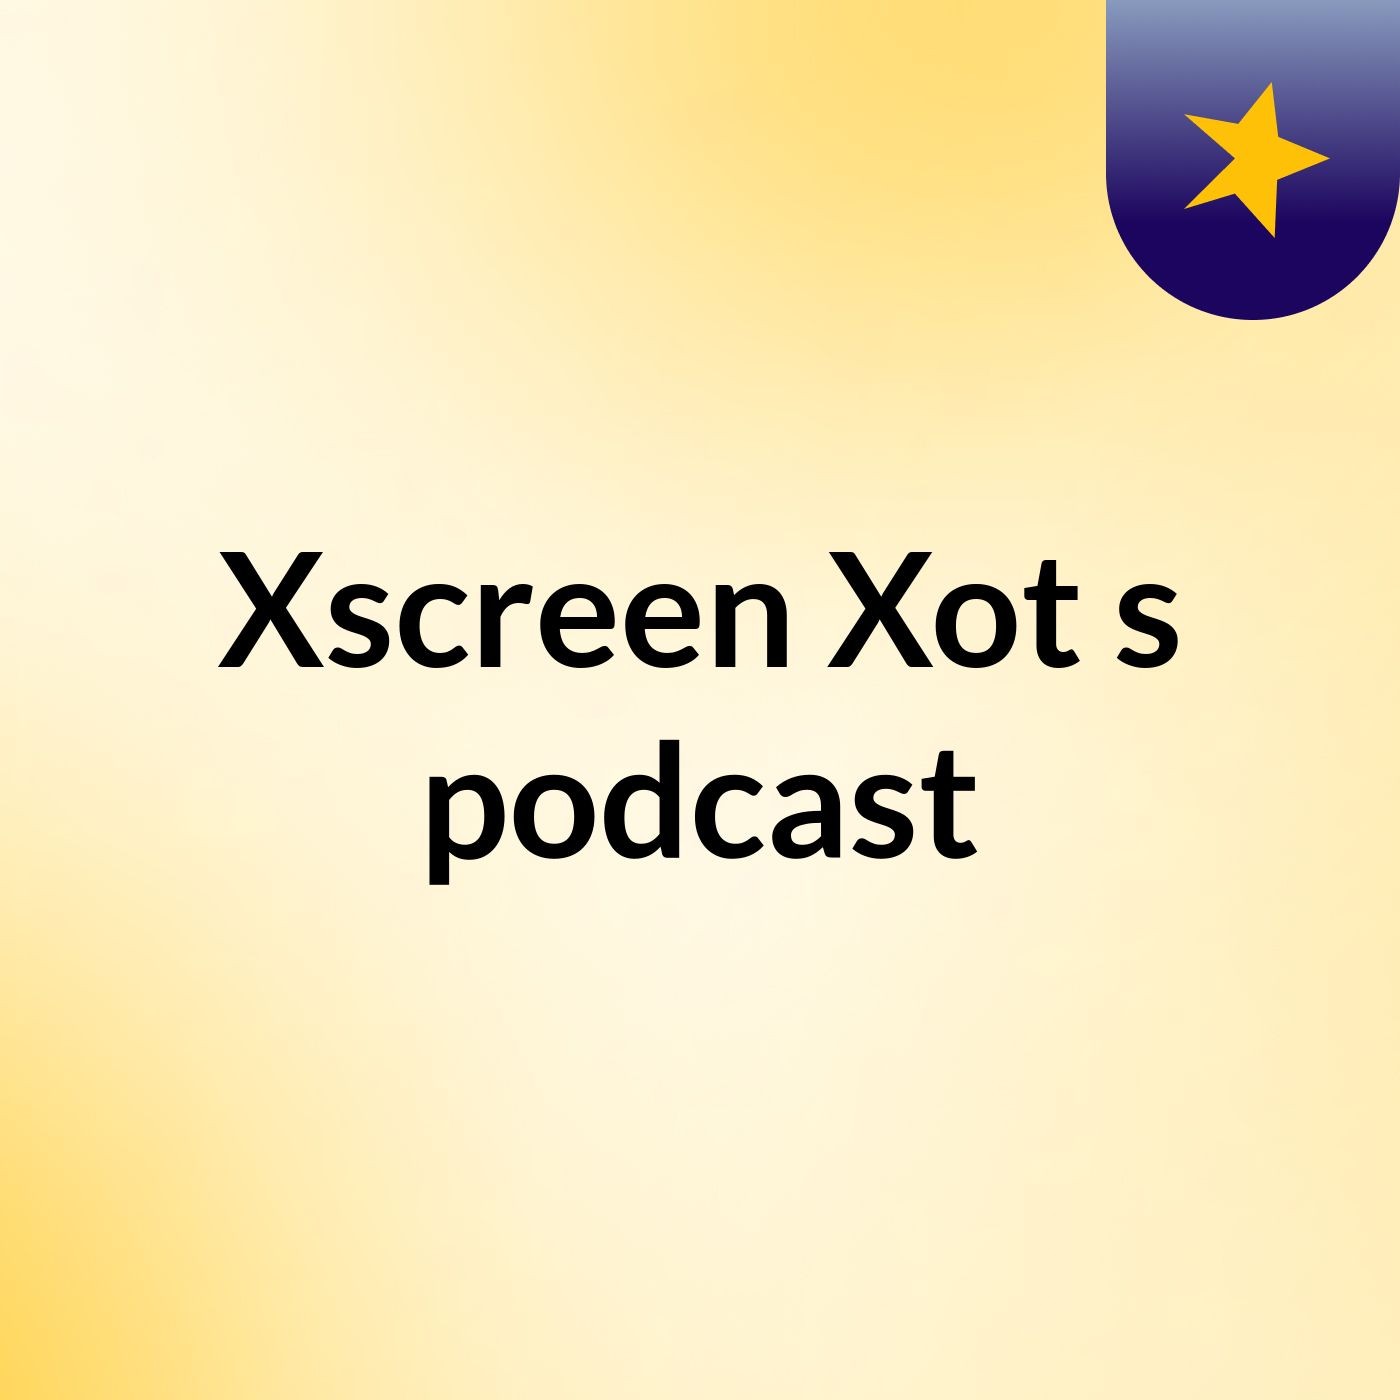 Xscreen Xot's podcast